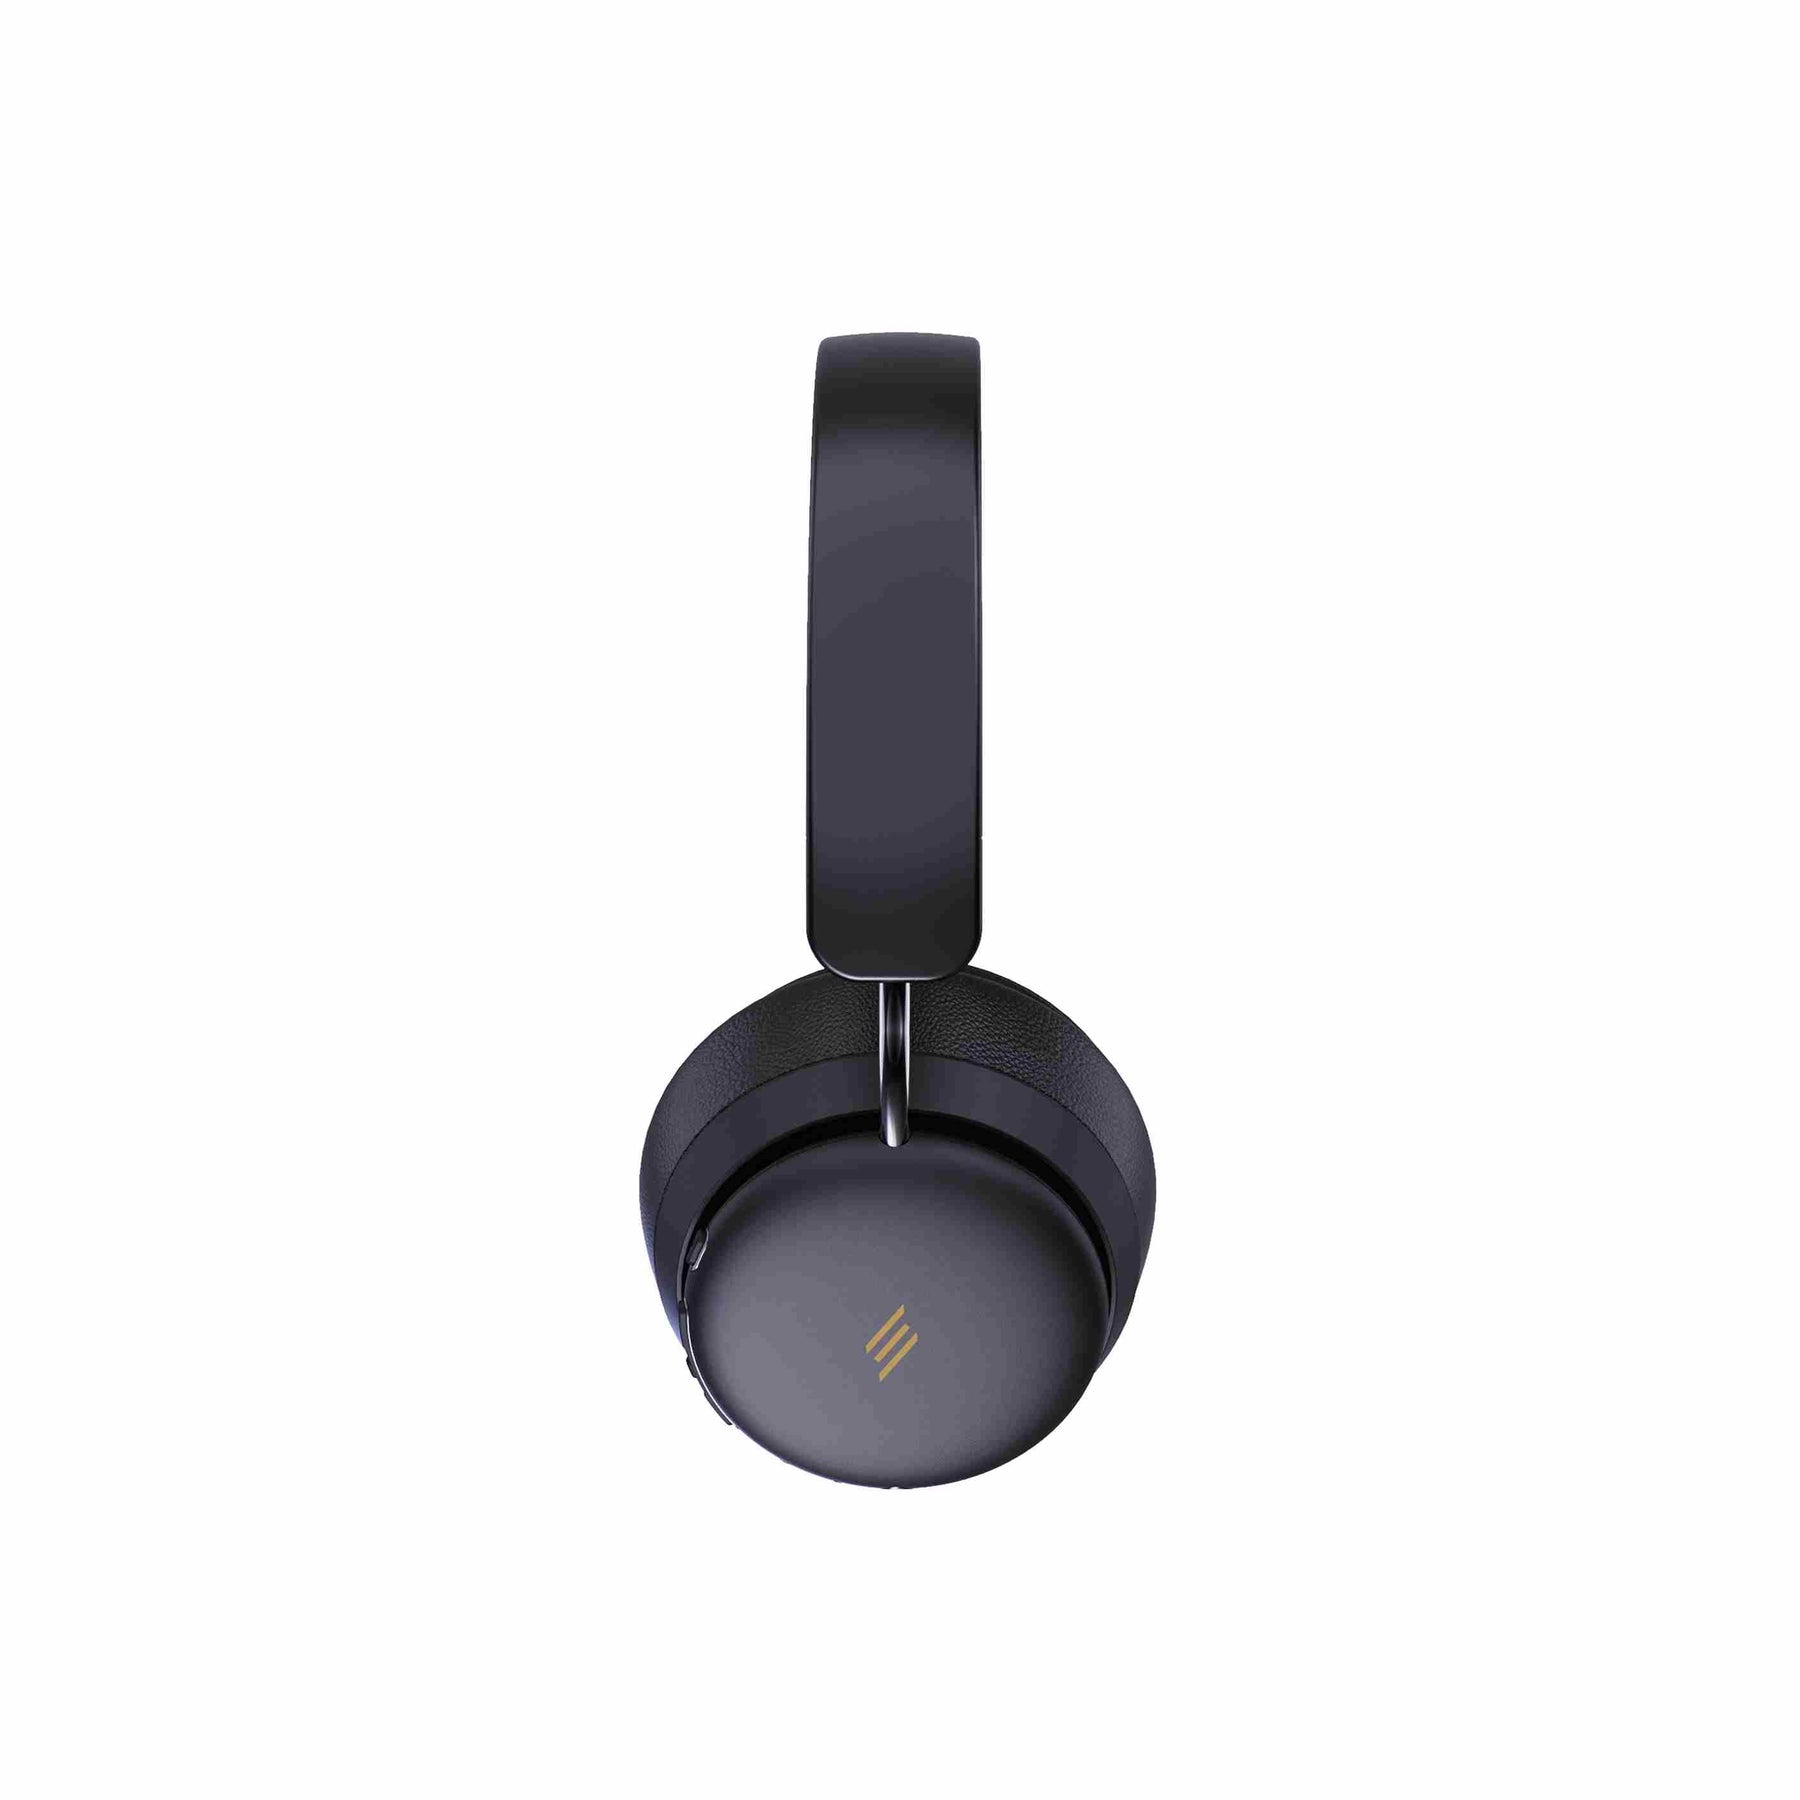 Passion 1 Wireless Headphone - Black